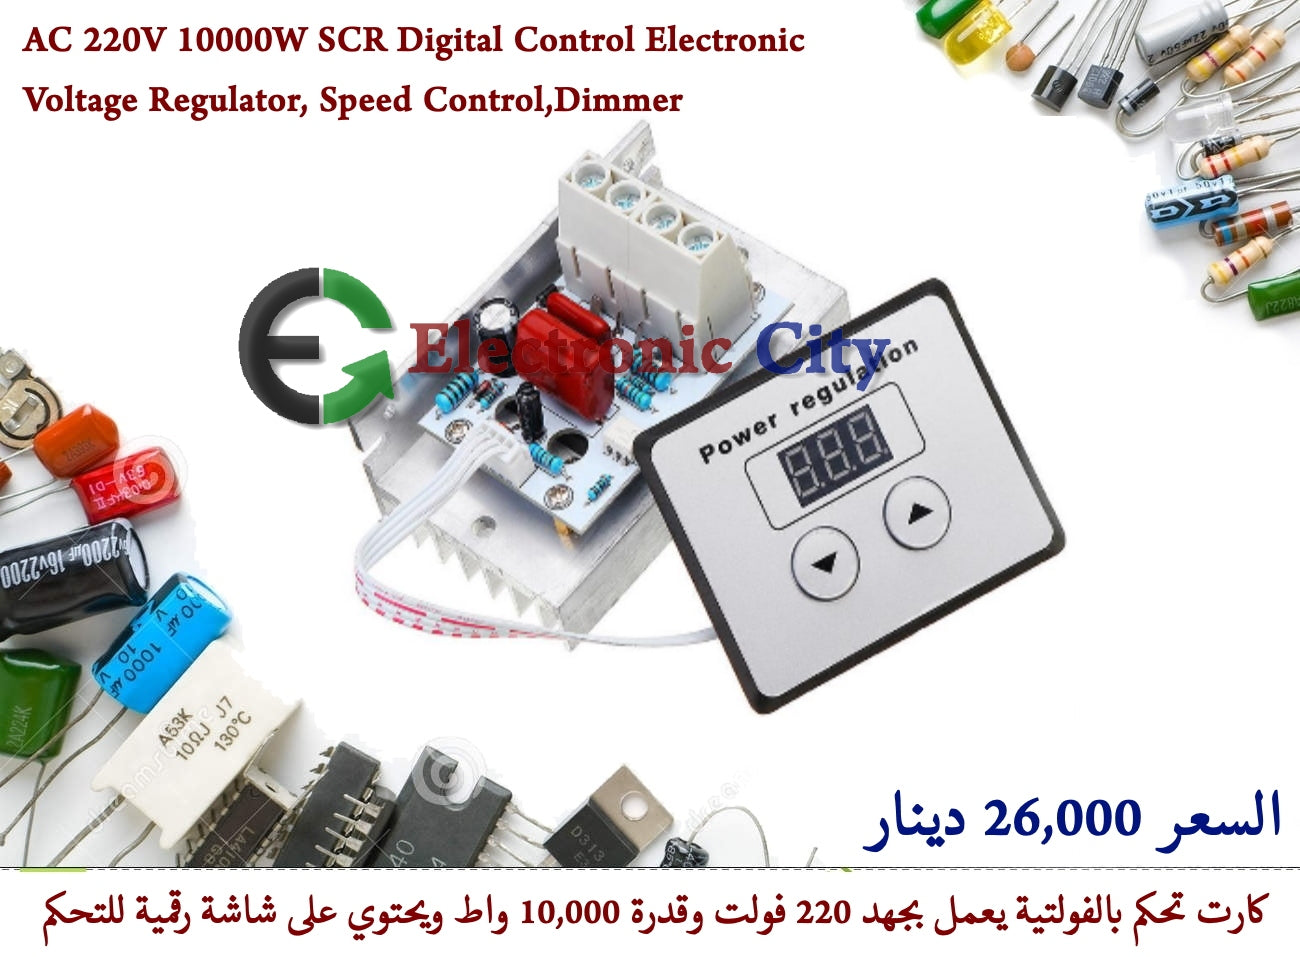 AC 220V 10000W SCR Digital Control Electronic Voltage Regulator, Speed Control,Dimmer #O6 X12892